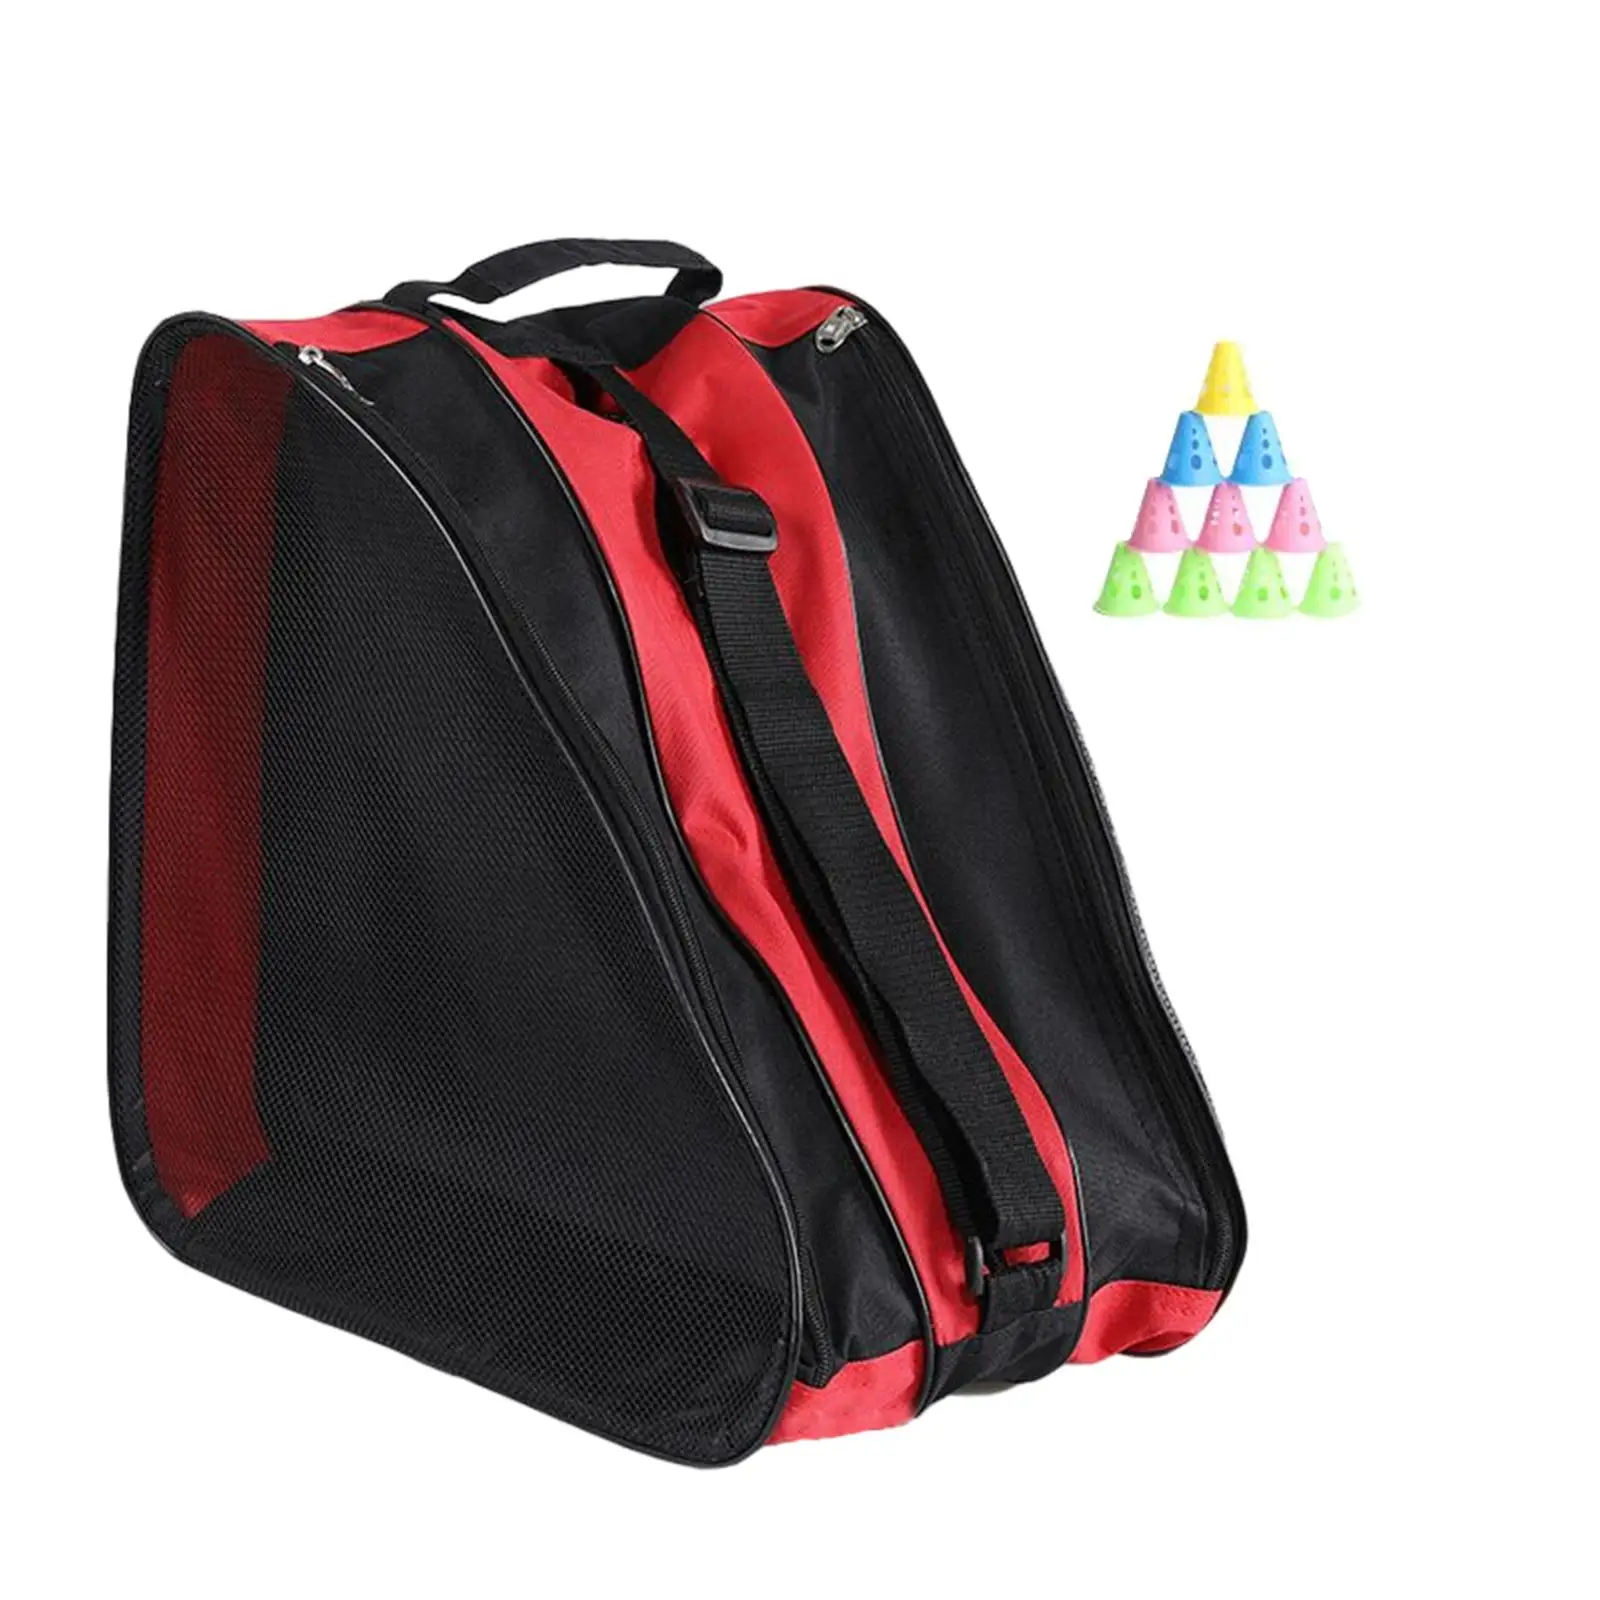 Roller Skate Bag Breathable Ice Skate Bag Carry Handle and Shoulder Strap, Triangle Skate Bag for Adult Accessories